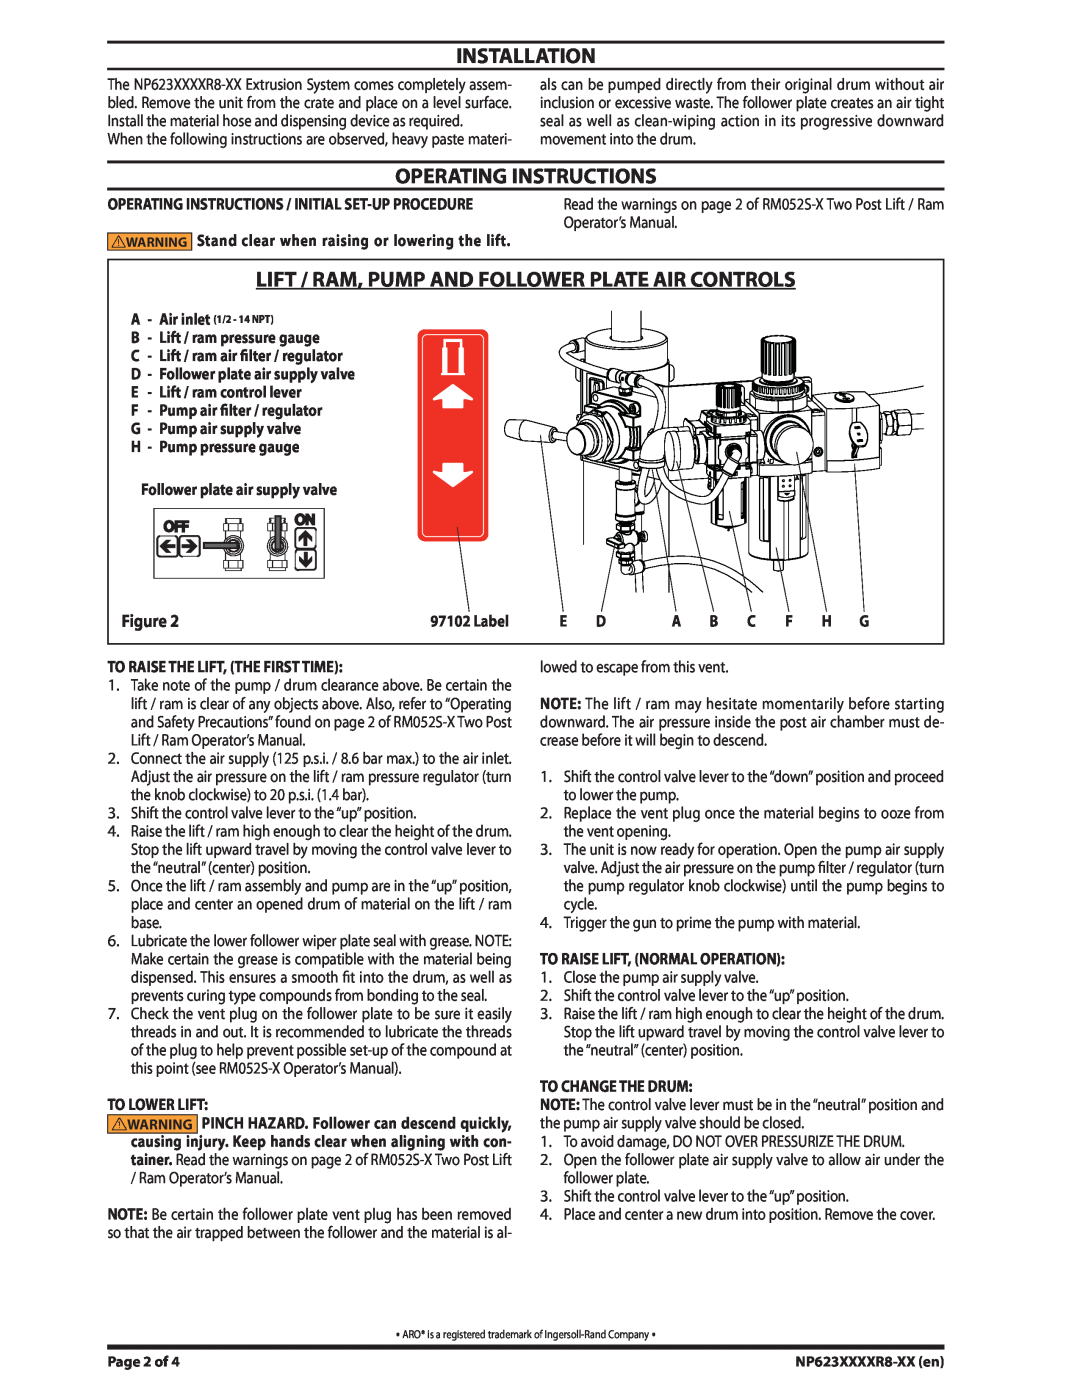 Ingersoll-Rand NP623XXXXR8-XX manual Installation, Operating Instructions, Lift / Ram, Pump And Follower Plate Air Controls 